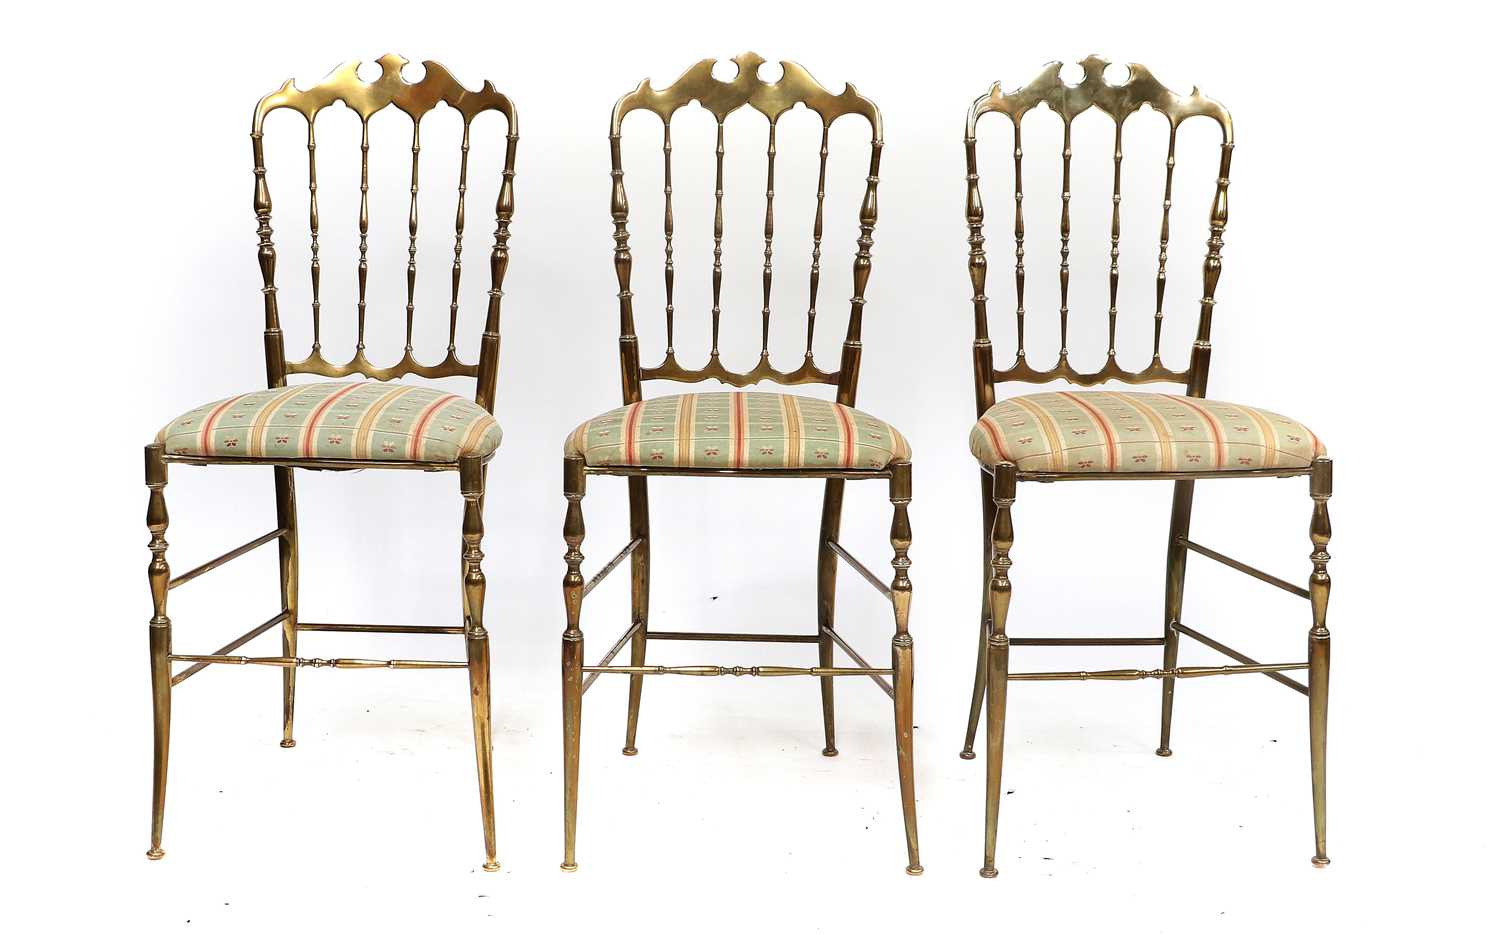 A Set of Three Mid Century Italian Chiavari Brass Chairs, after a design by Giuseppe Gaetano